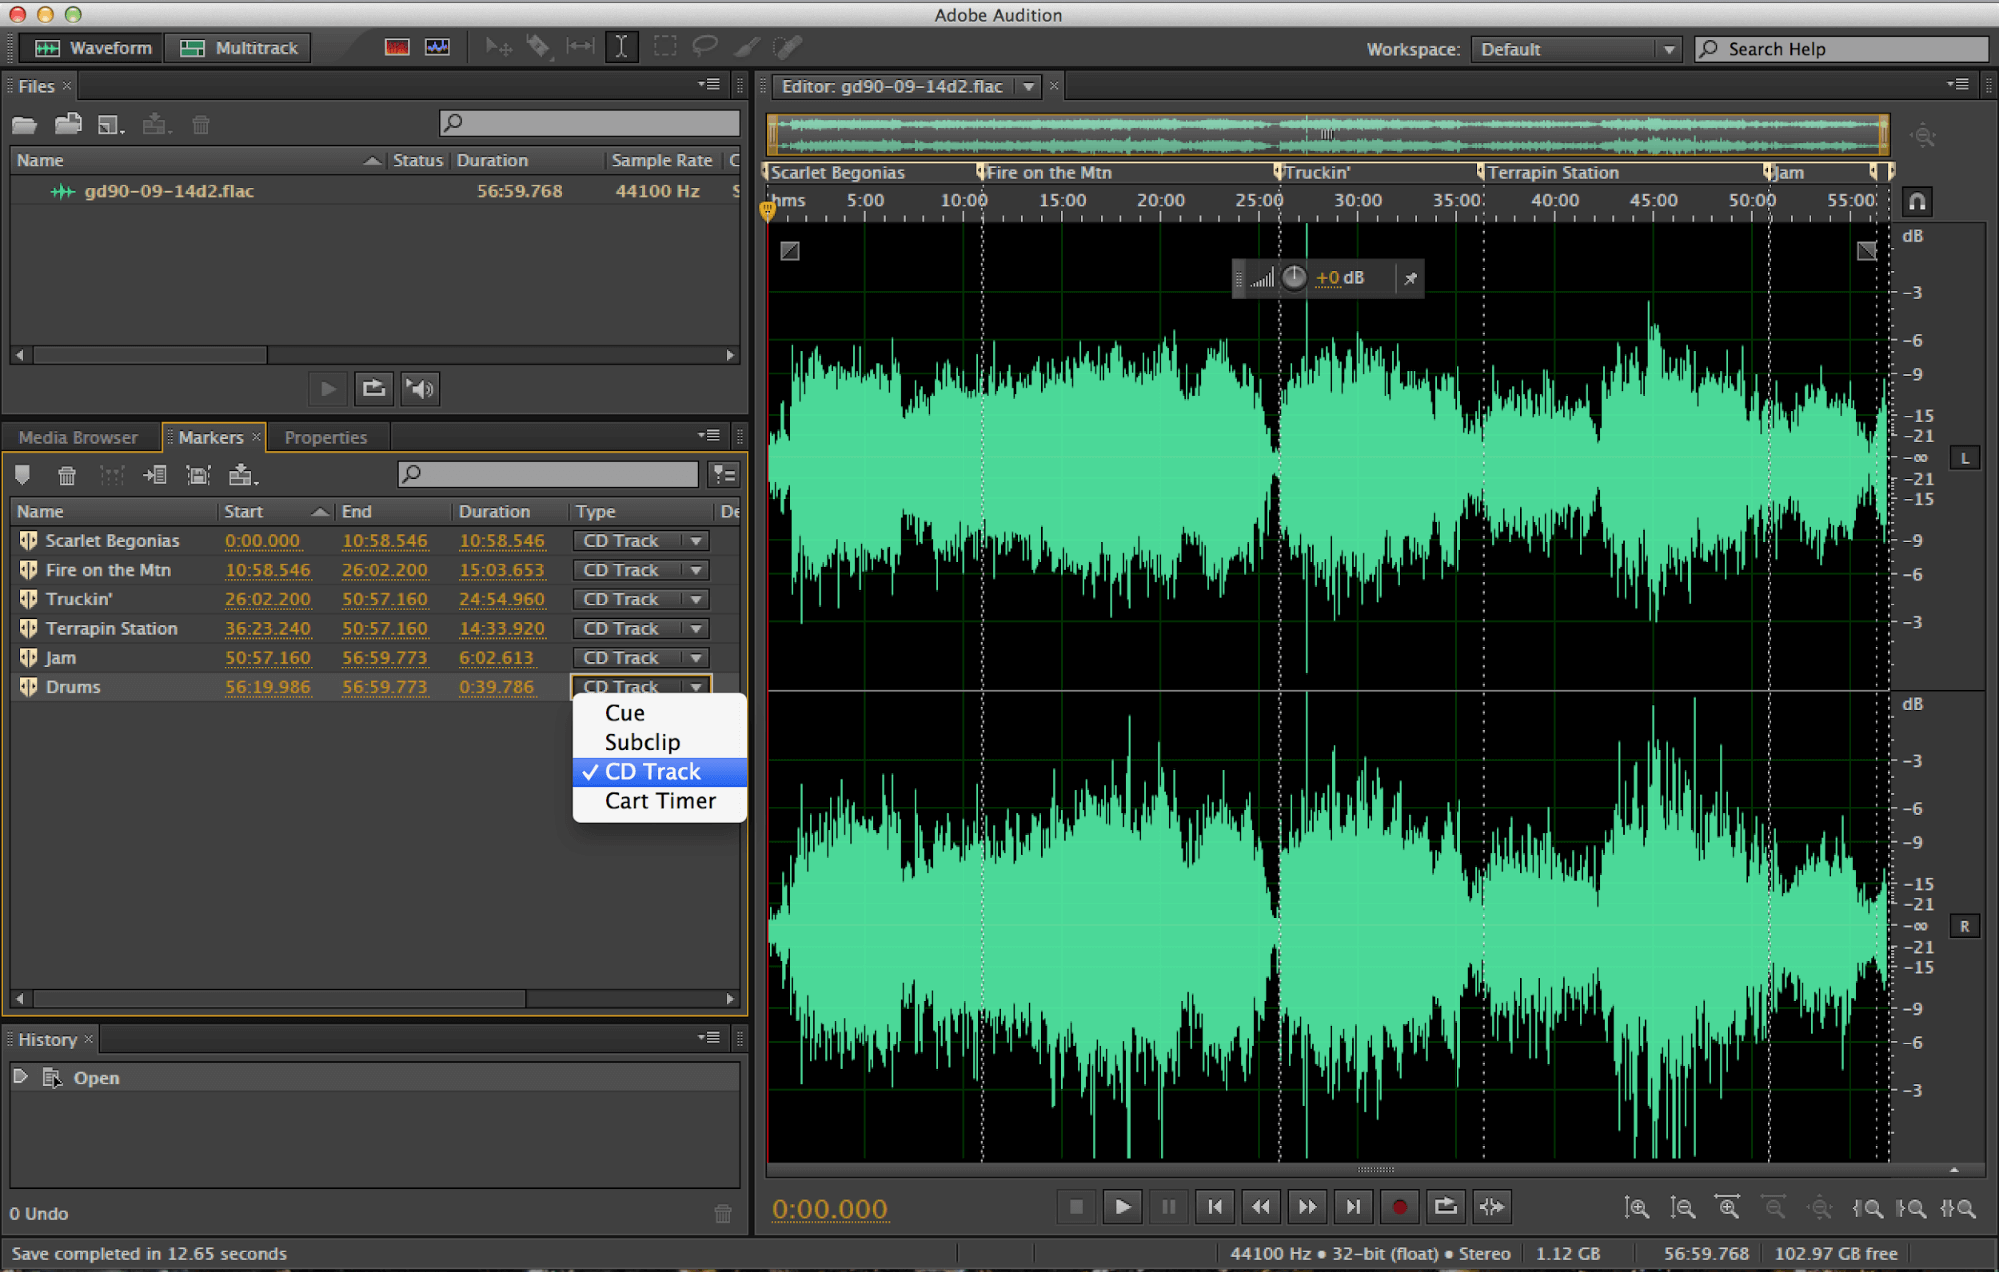 adobe sound editing software free download